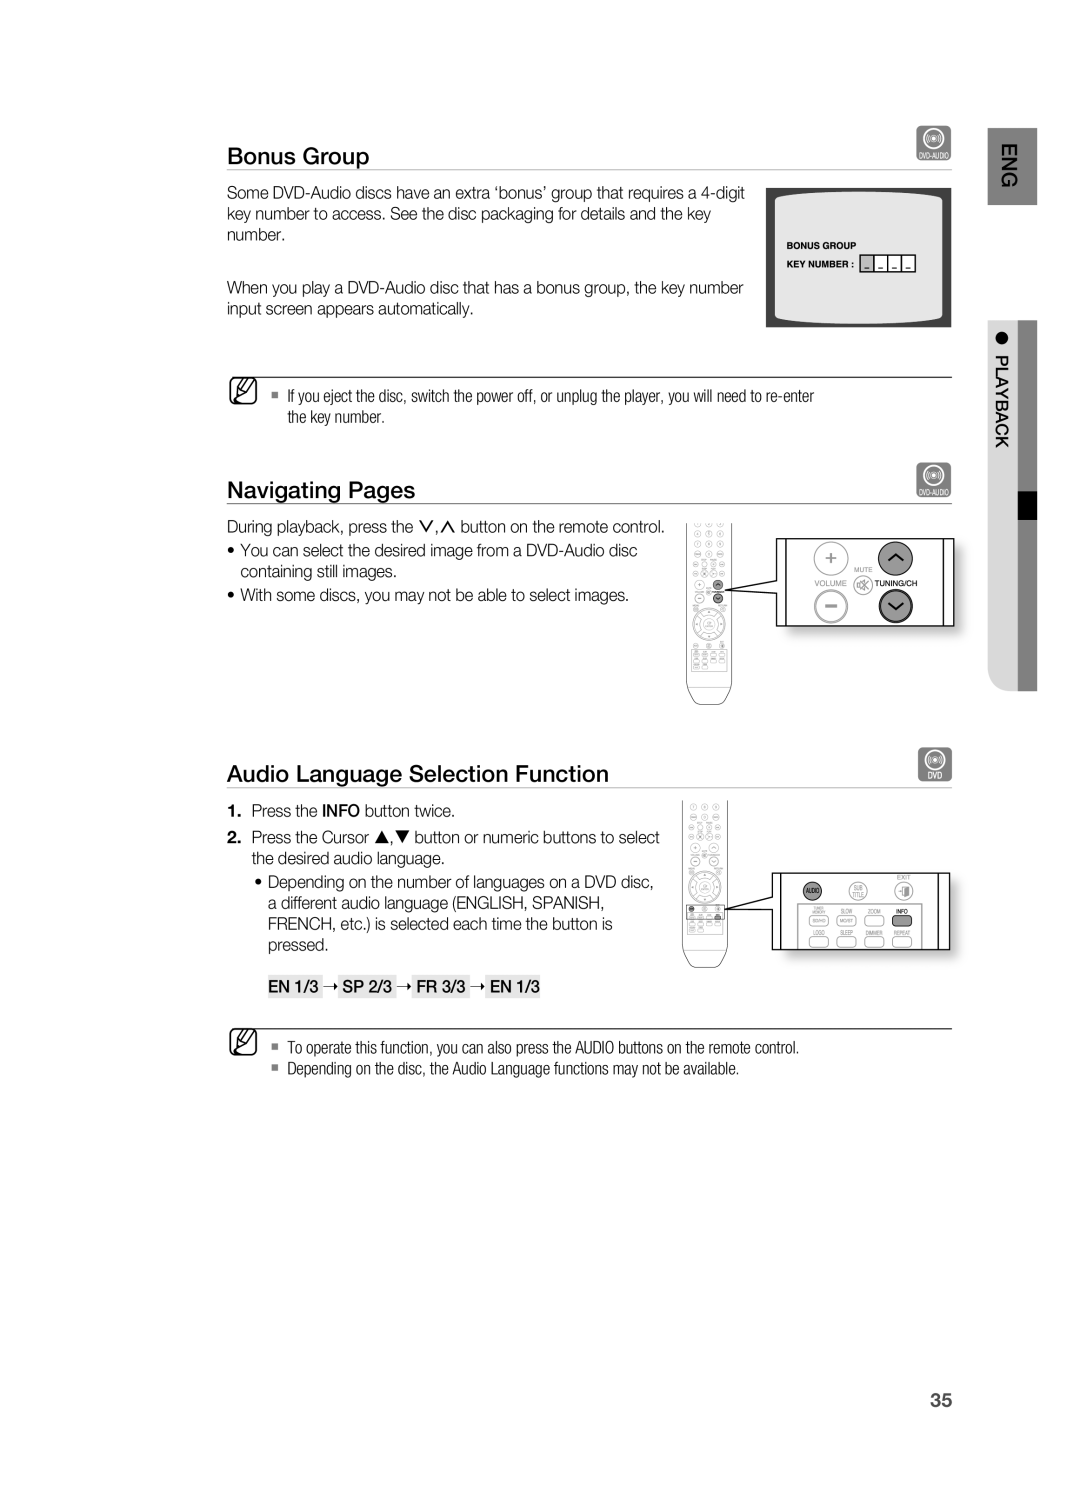 Samsung HT-A100 user manual Bonus group, Navigating Pages, Audio language Selection Function 